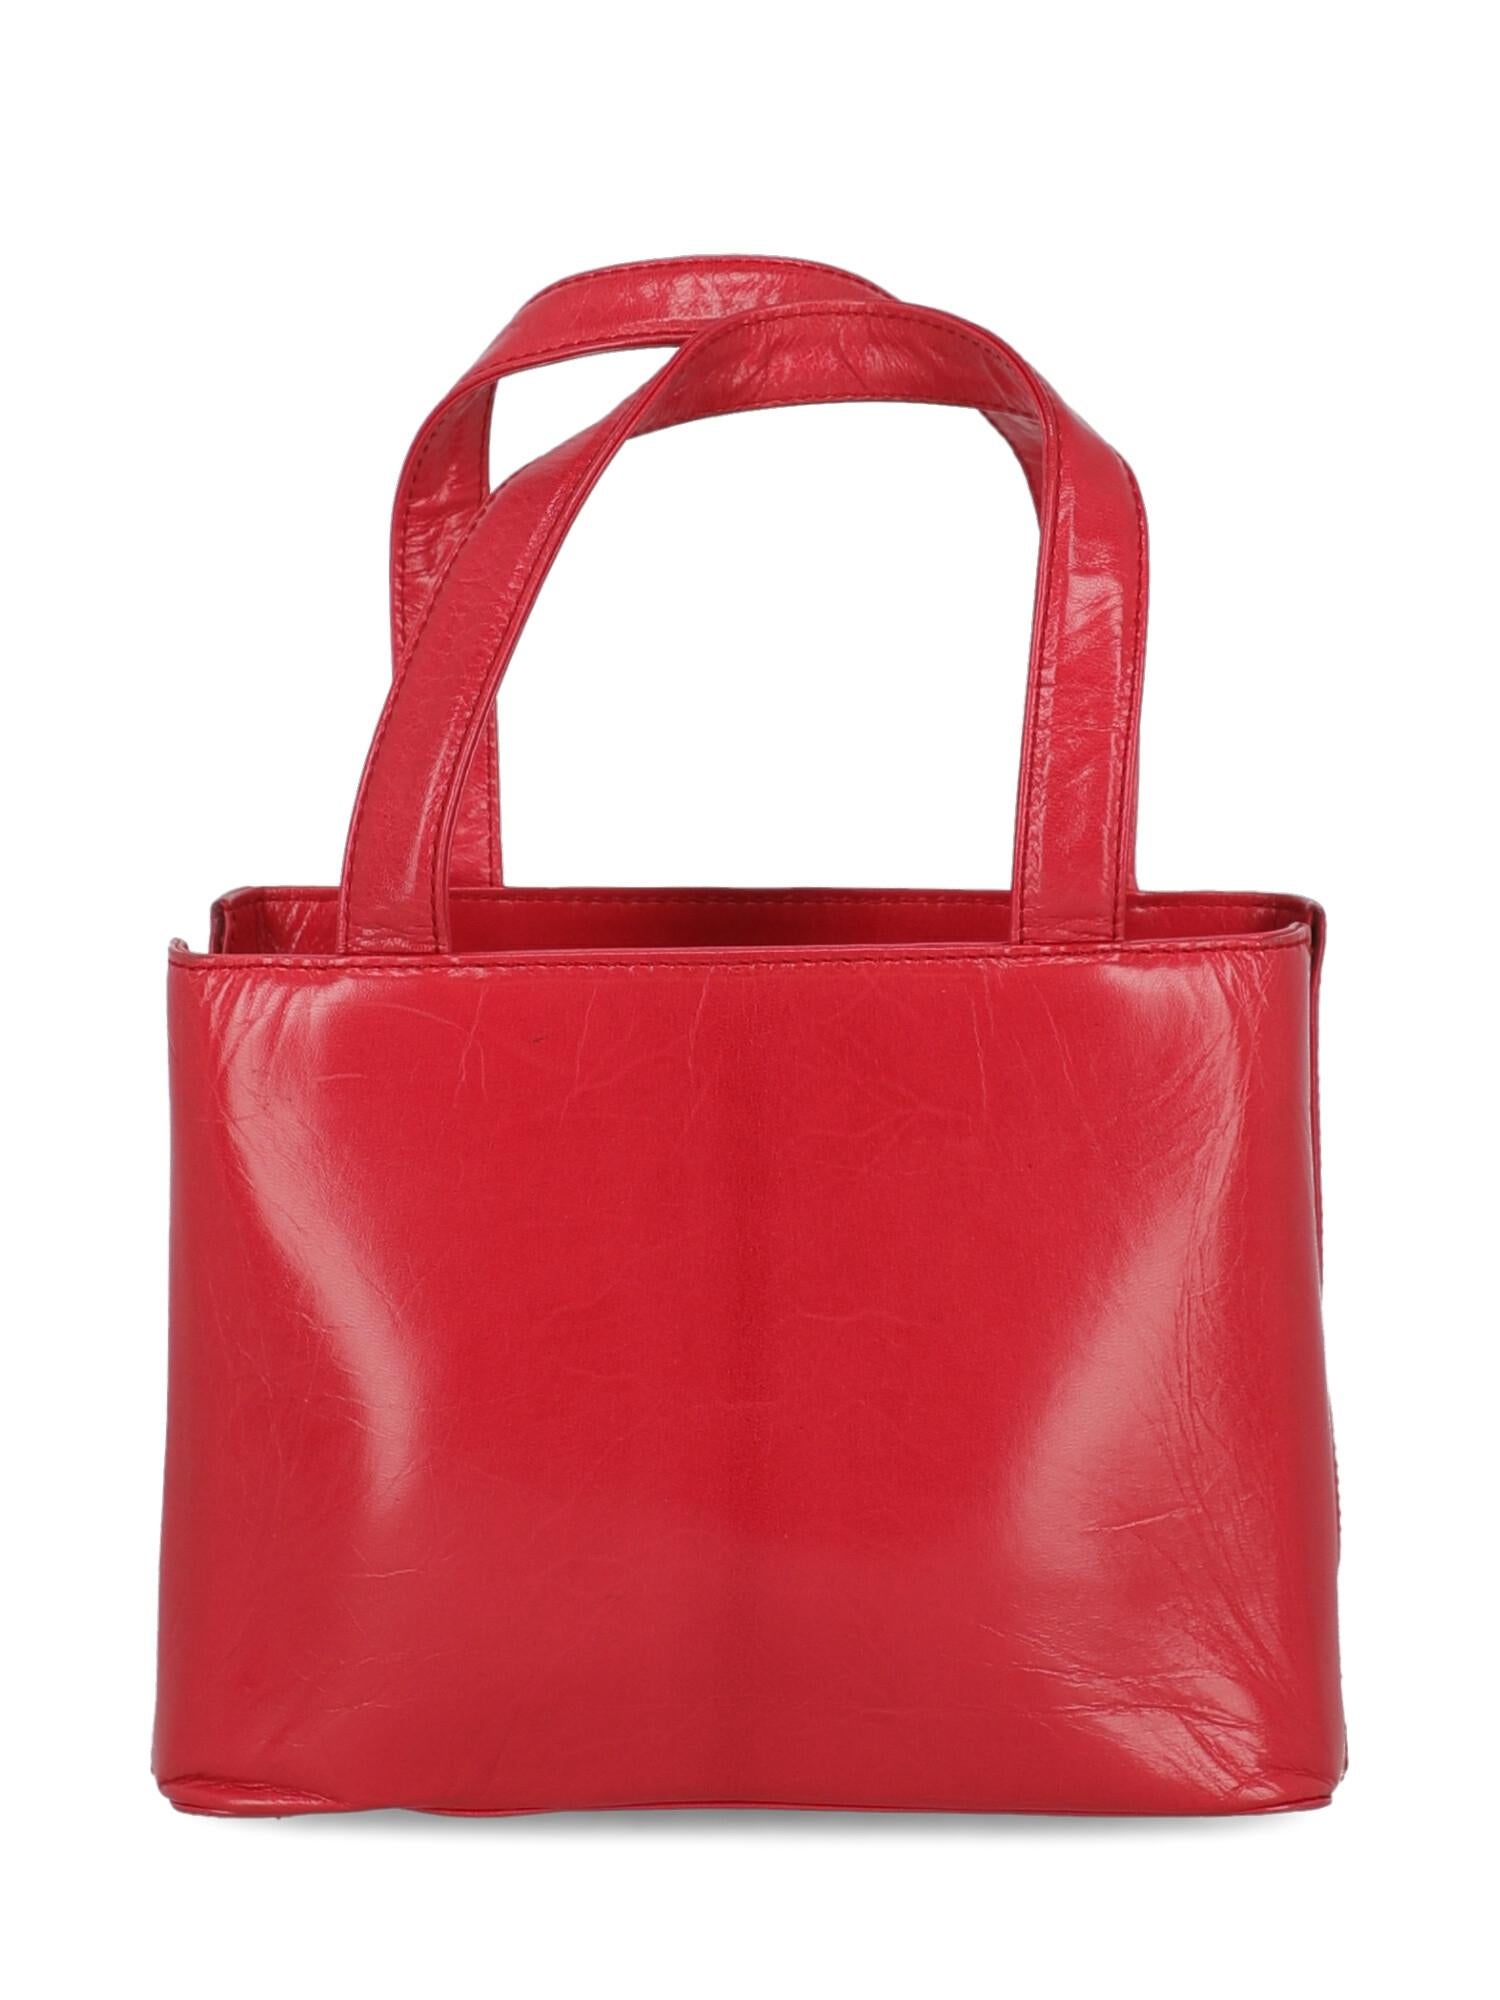 sergio rossi handbags